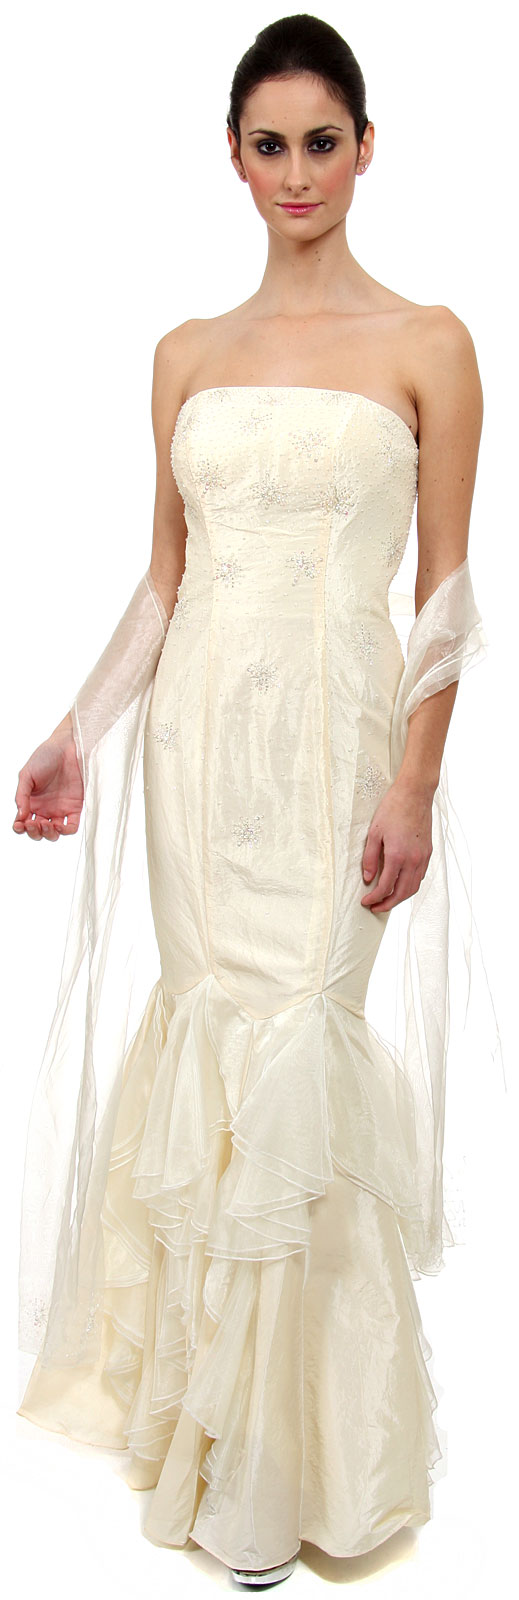 Image of Strapless Beaded Mermaid Style Formal Wedding Dress in alternative image